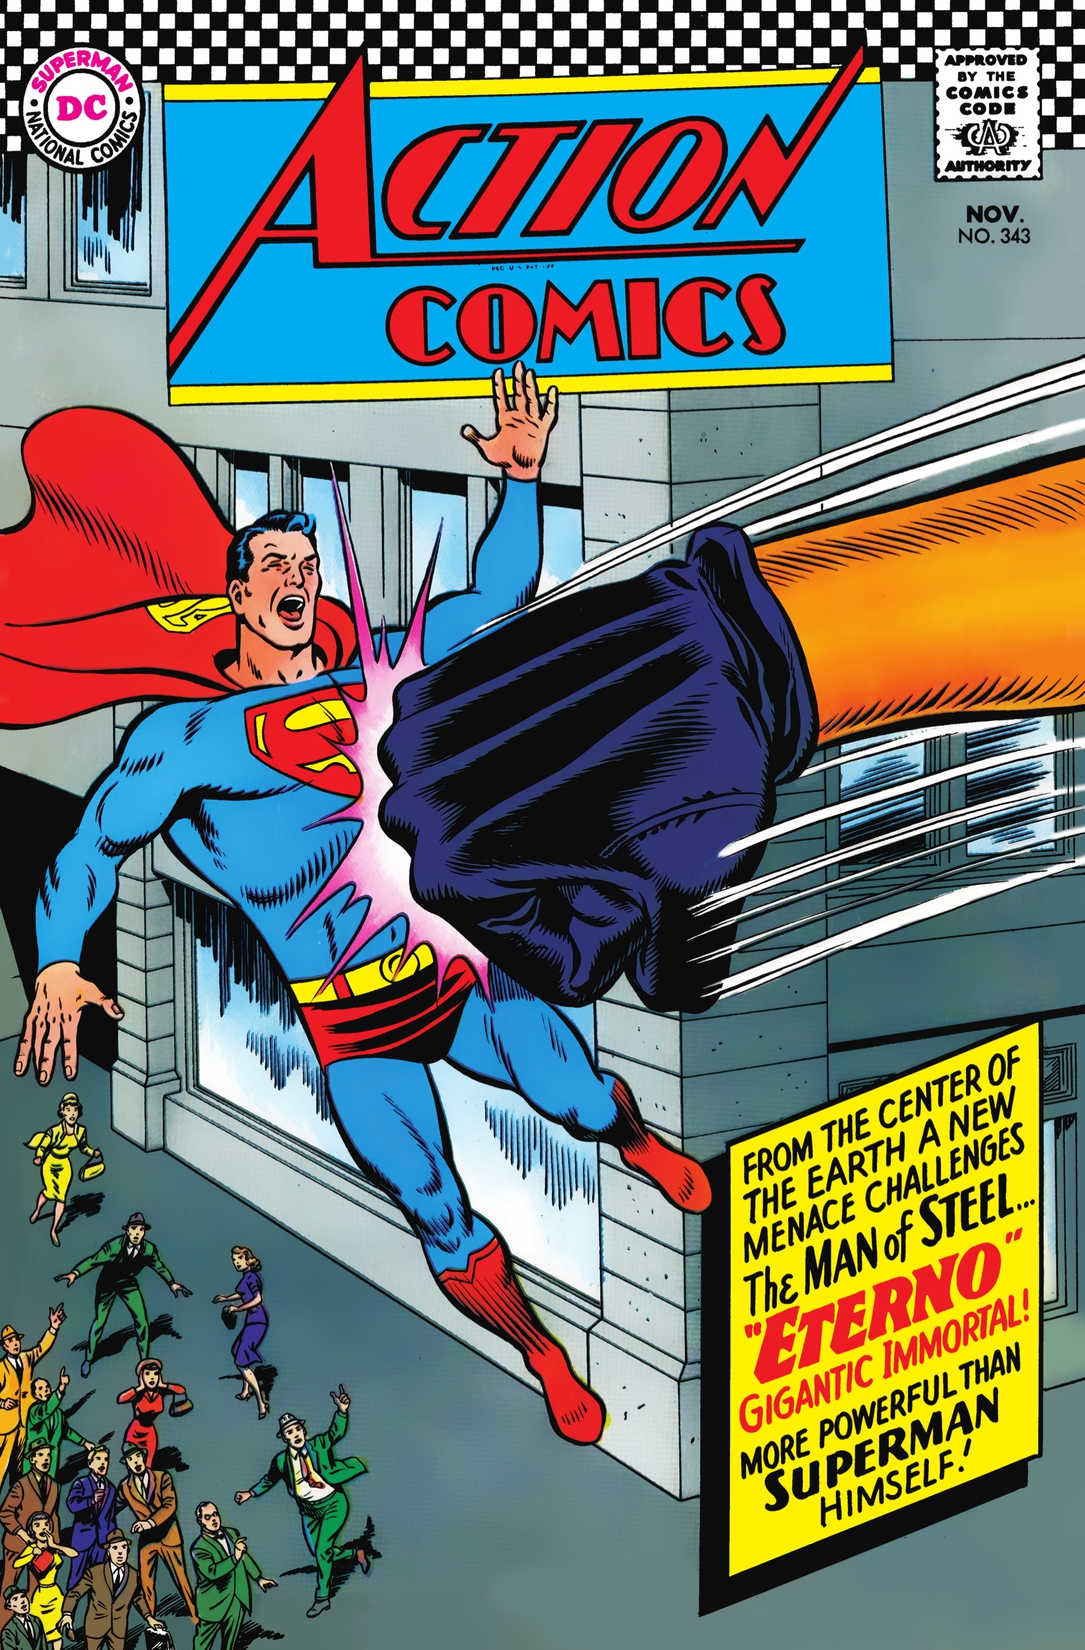 Action Comics (1938-2011) #343 preview images